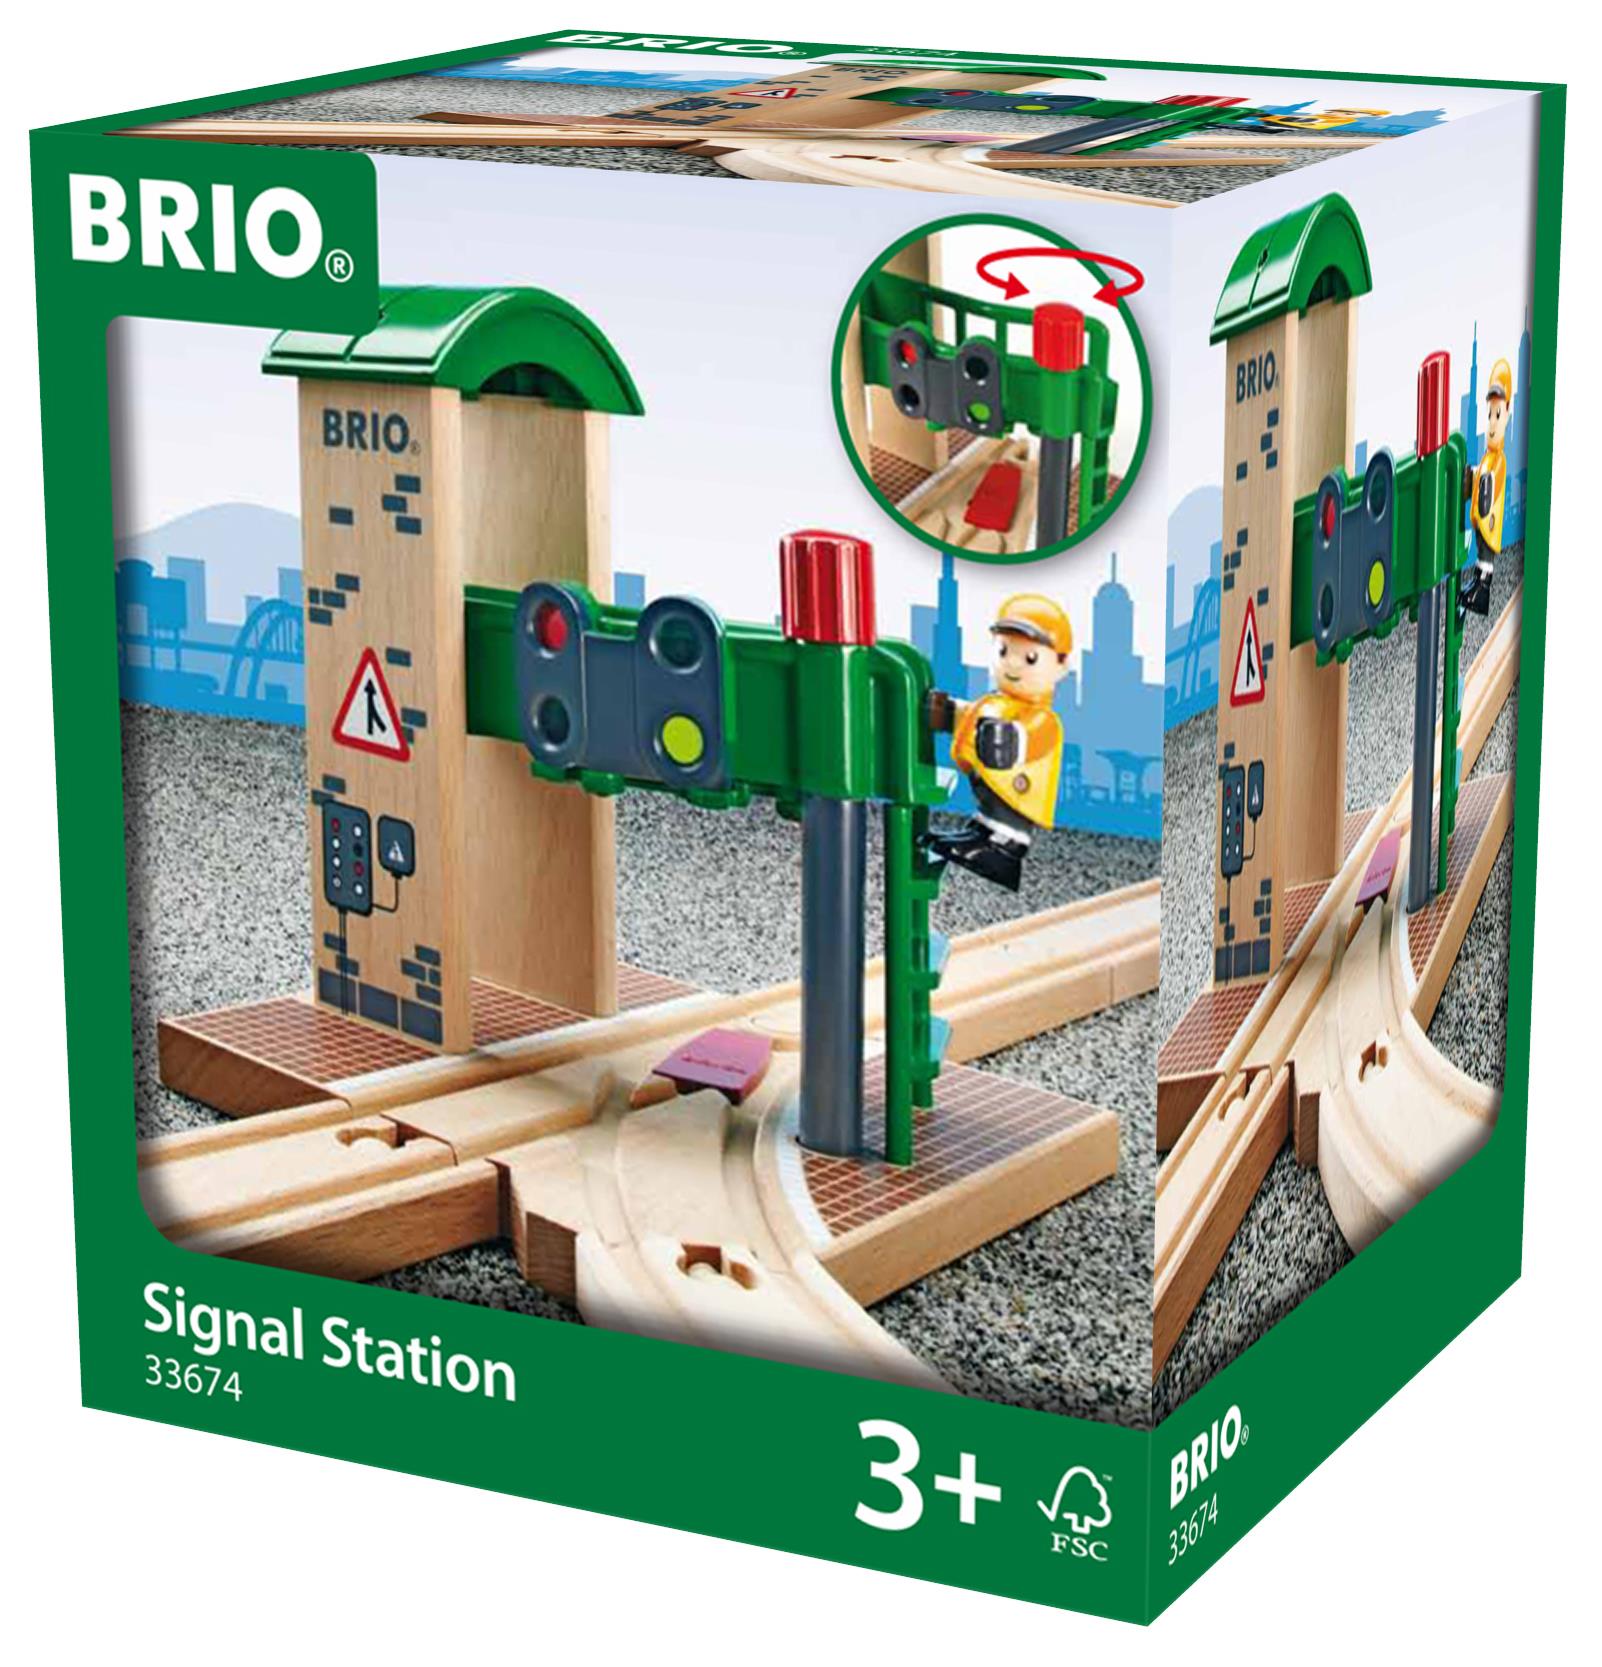 Brio 33674 Signal Station